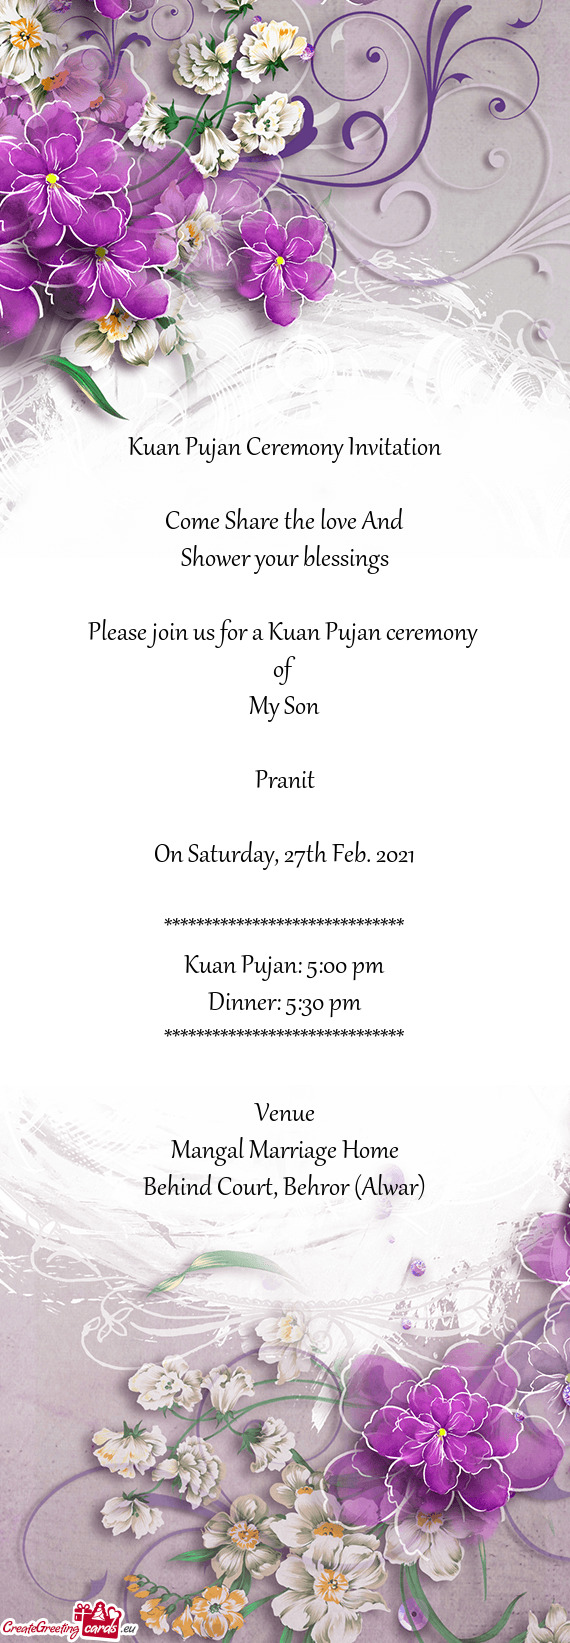 Kuan Pujan Ceremony Invitation